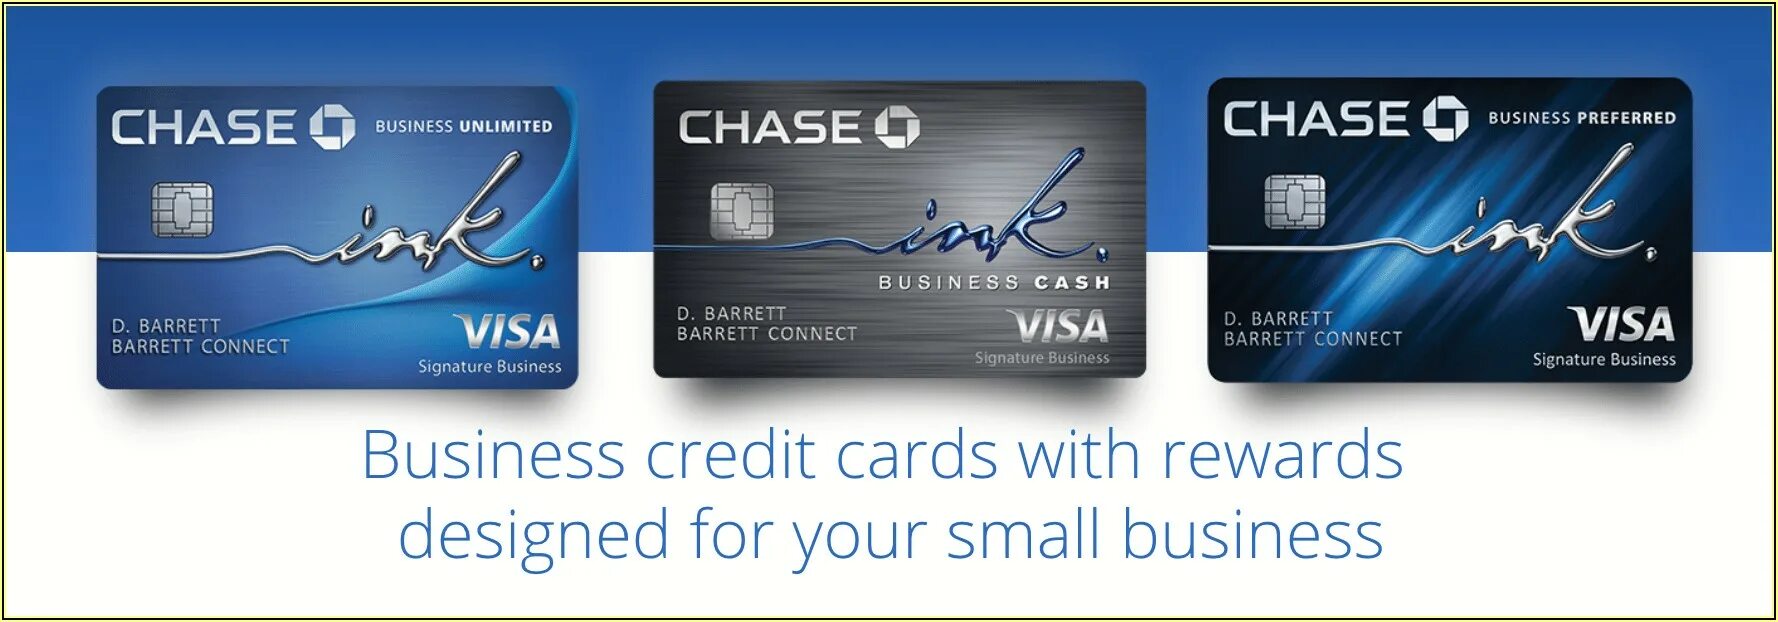 Бизнес кредит карта. Chase Business. Банковская карта бизнес preffered. Unlimited Card. Chevy Chase credit Cards.